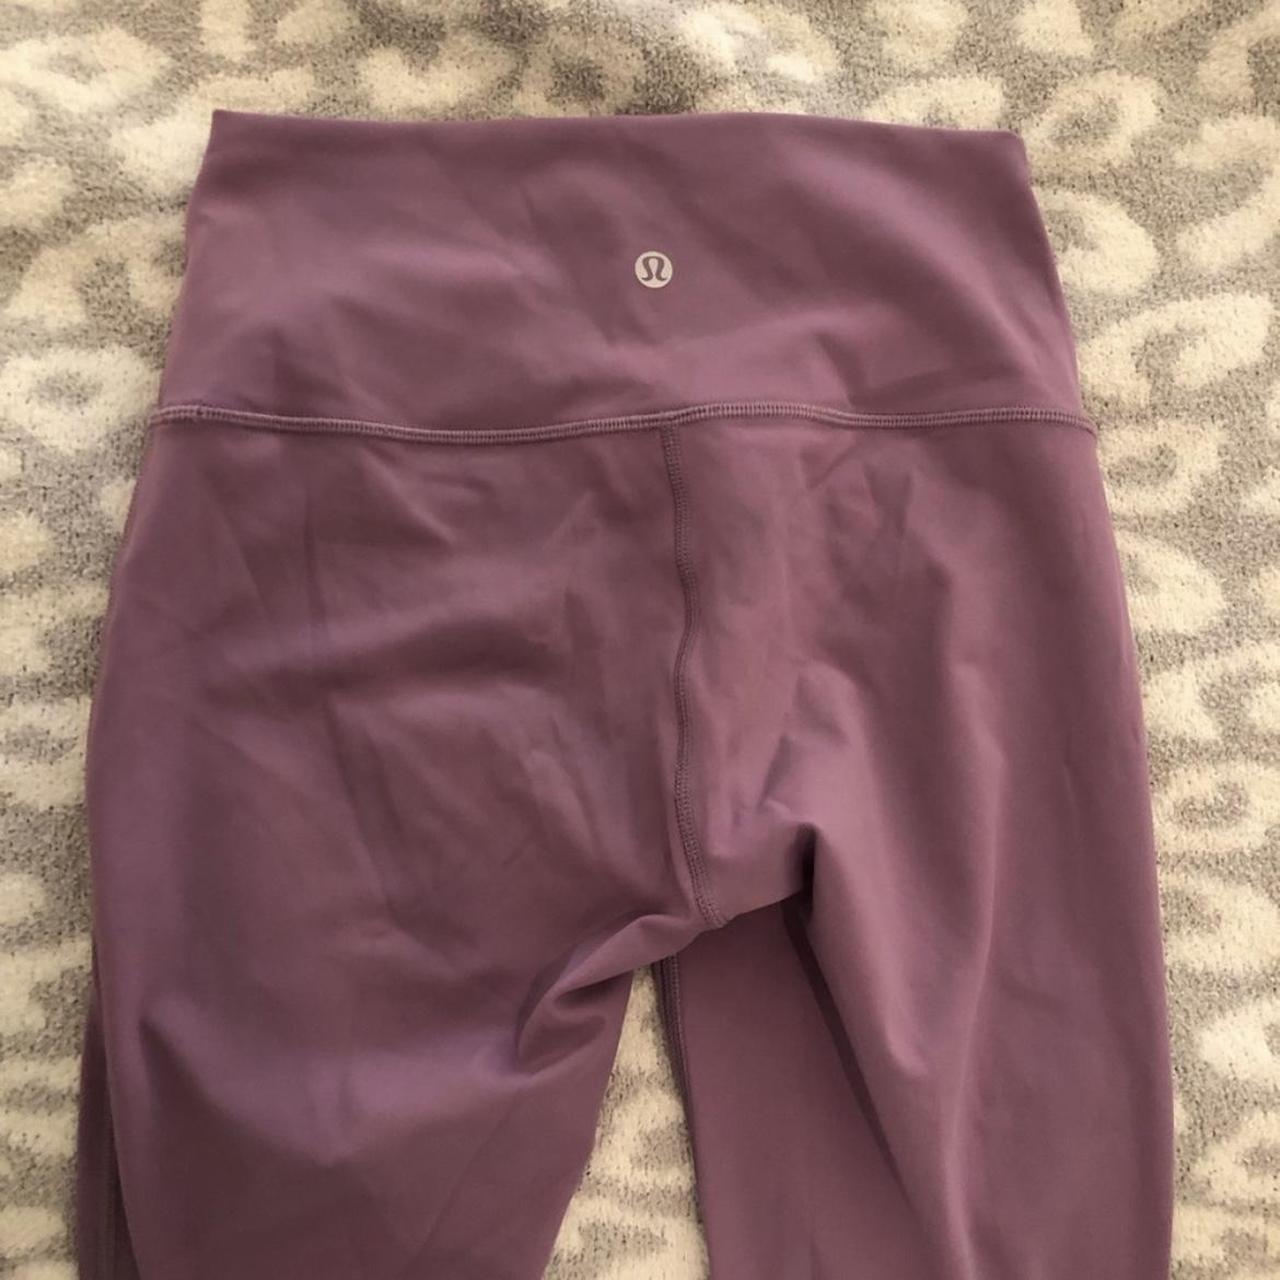 Lululemon leggings wisteria purple discontinued - Depop